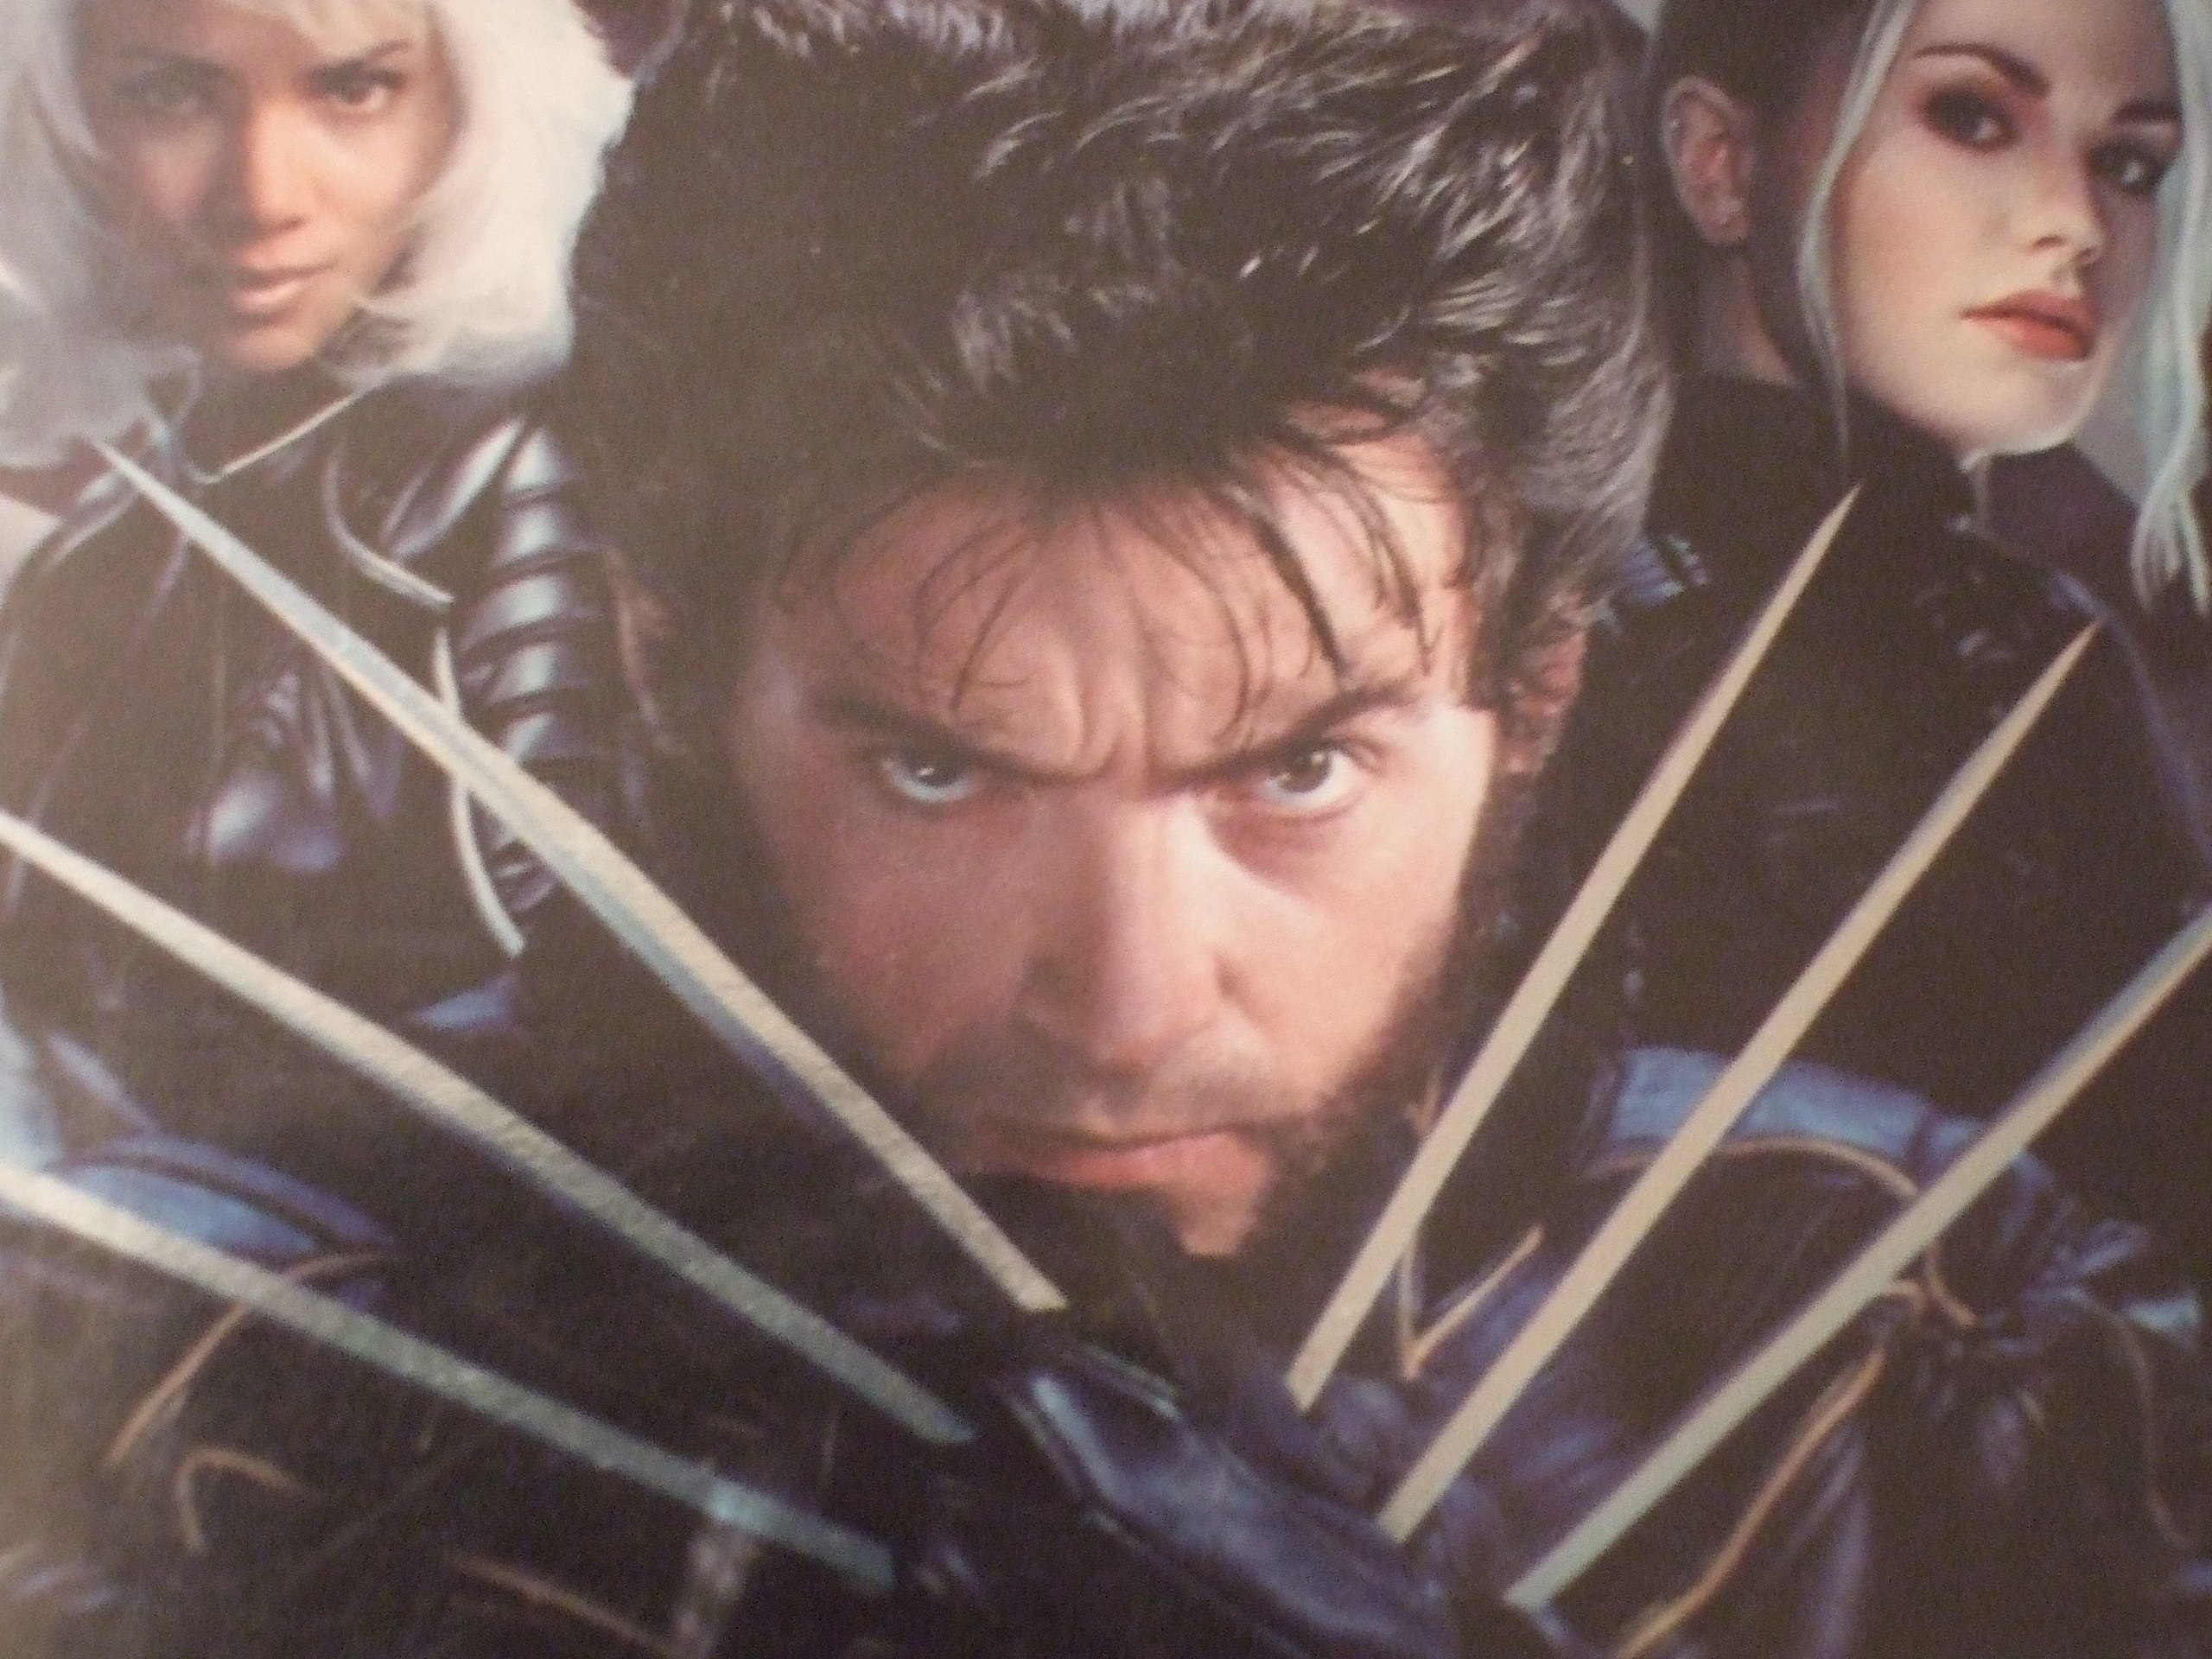 Wolverine - X-Men Origins: Wolverine Wallpaper (2503145) - Fanpop